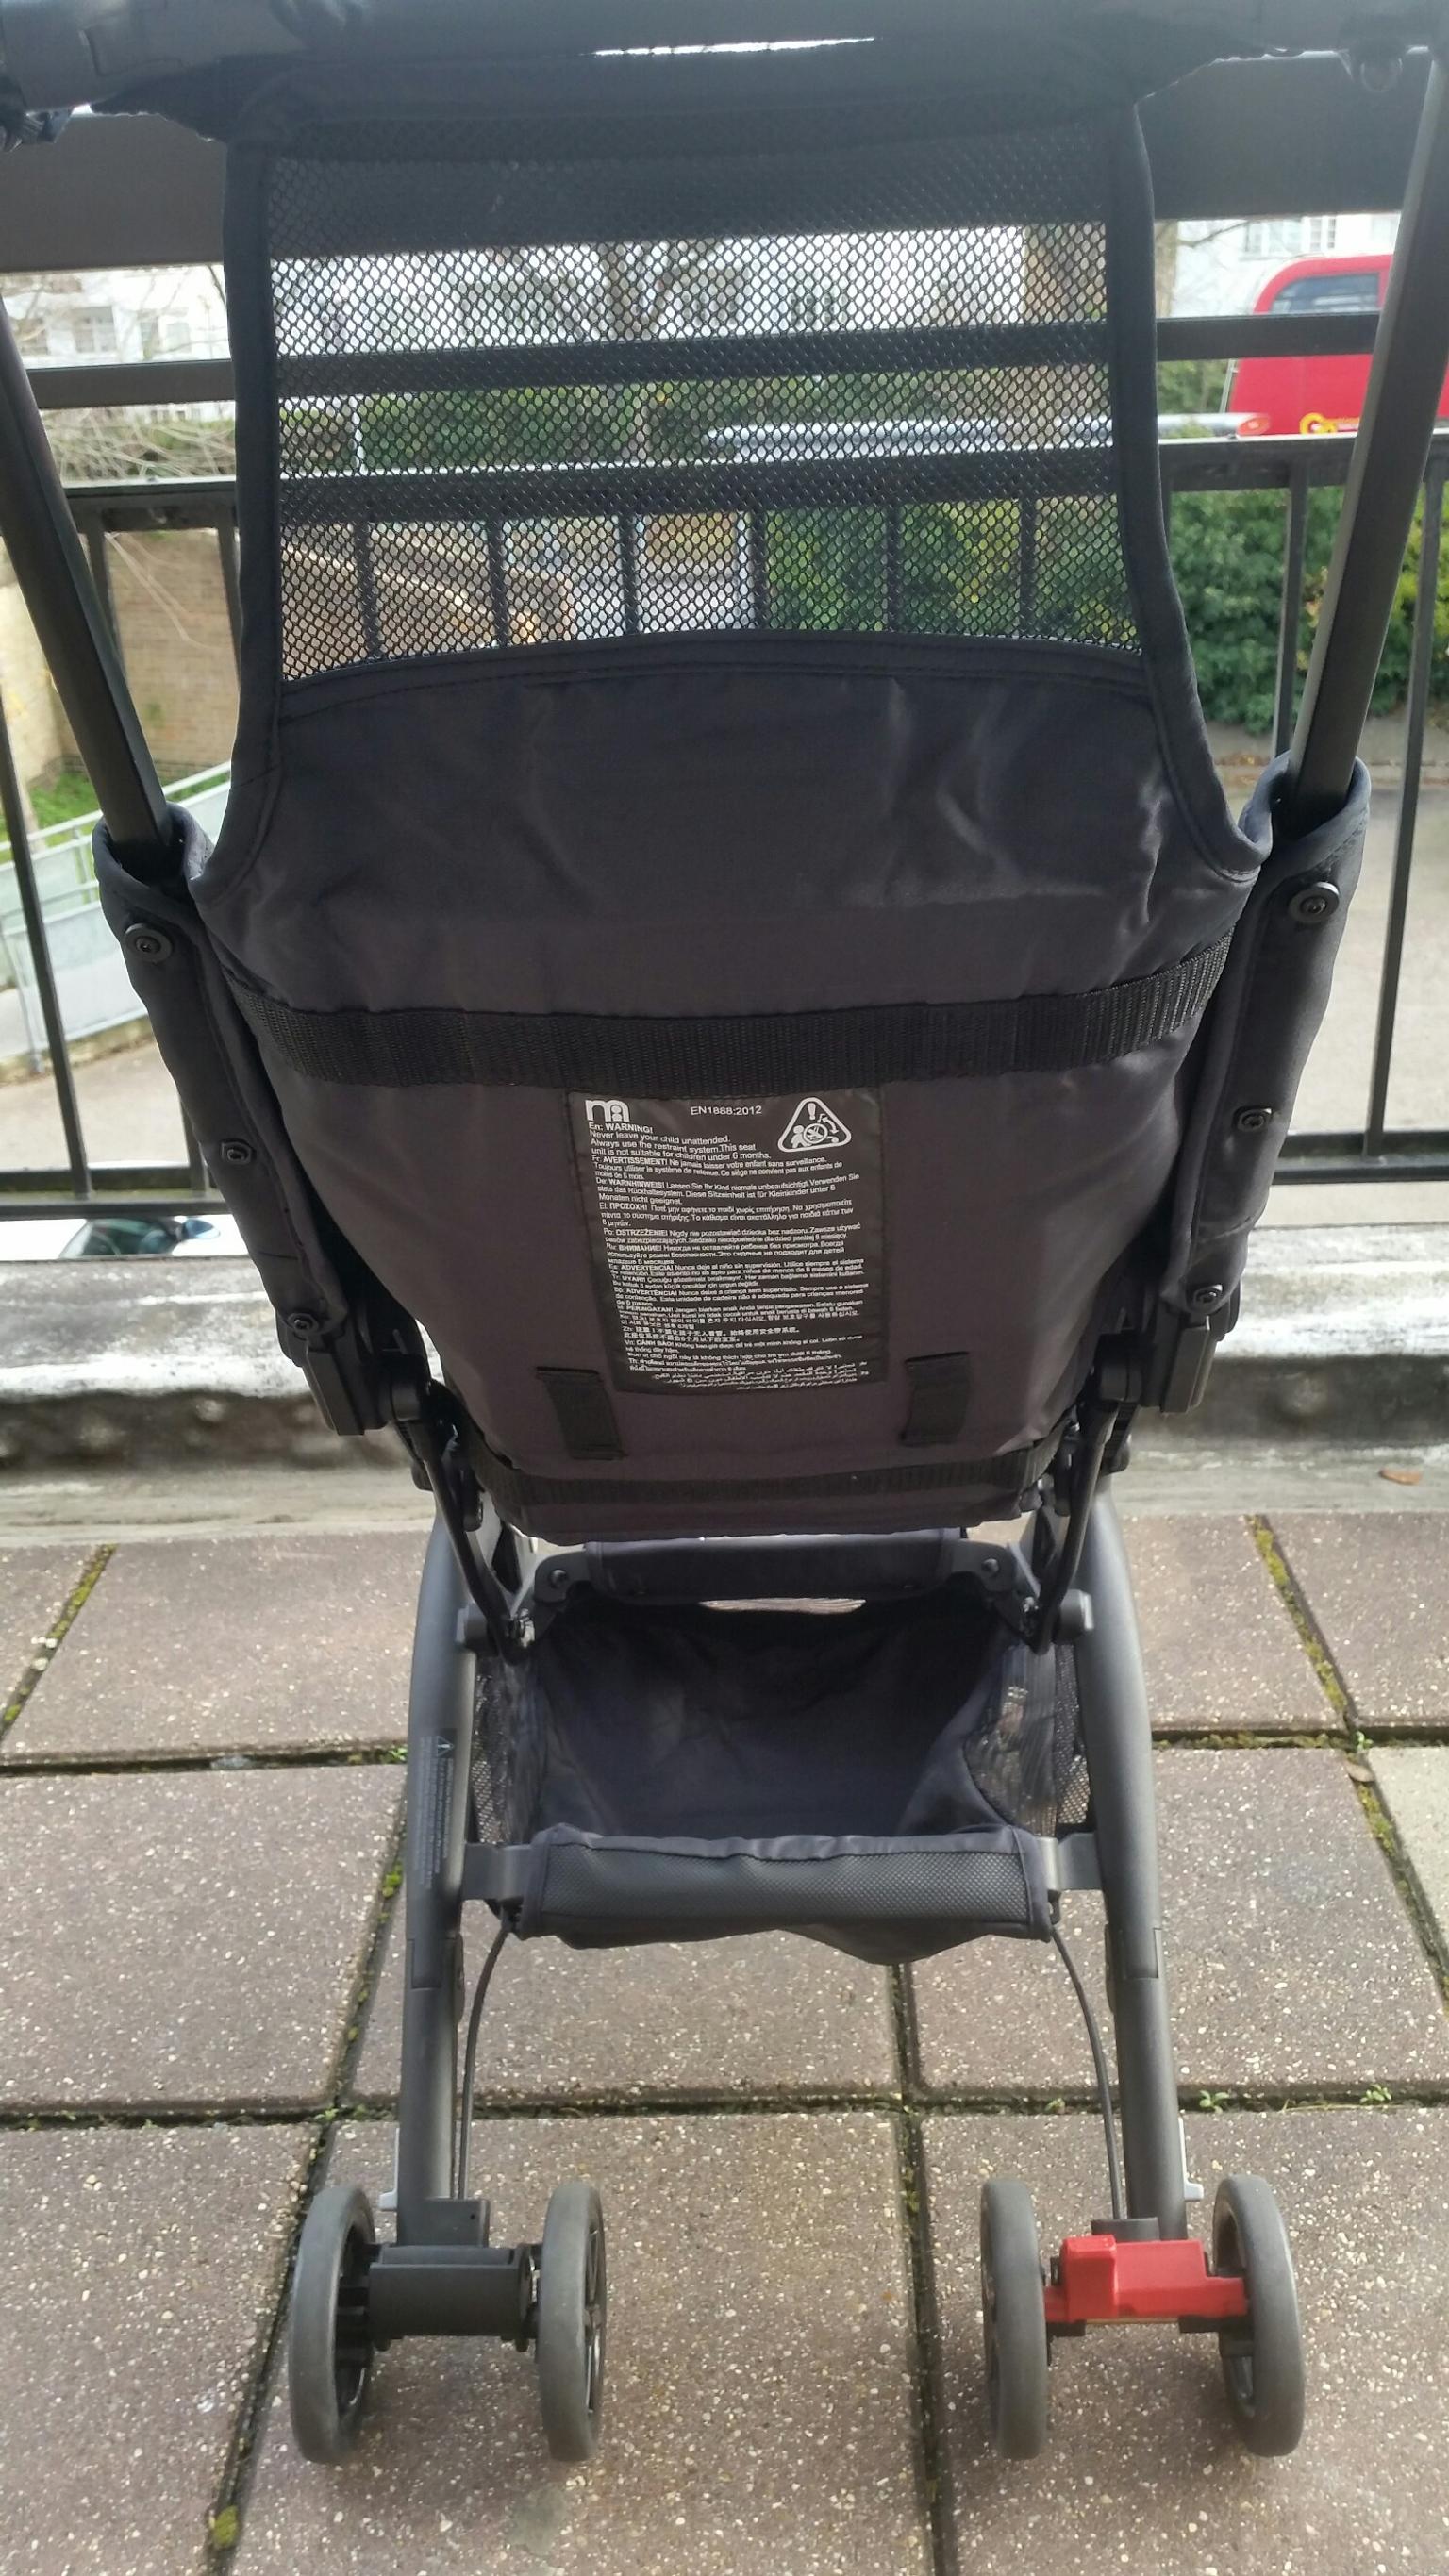 gb pockit stroller mothercare